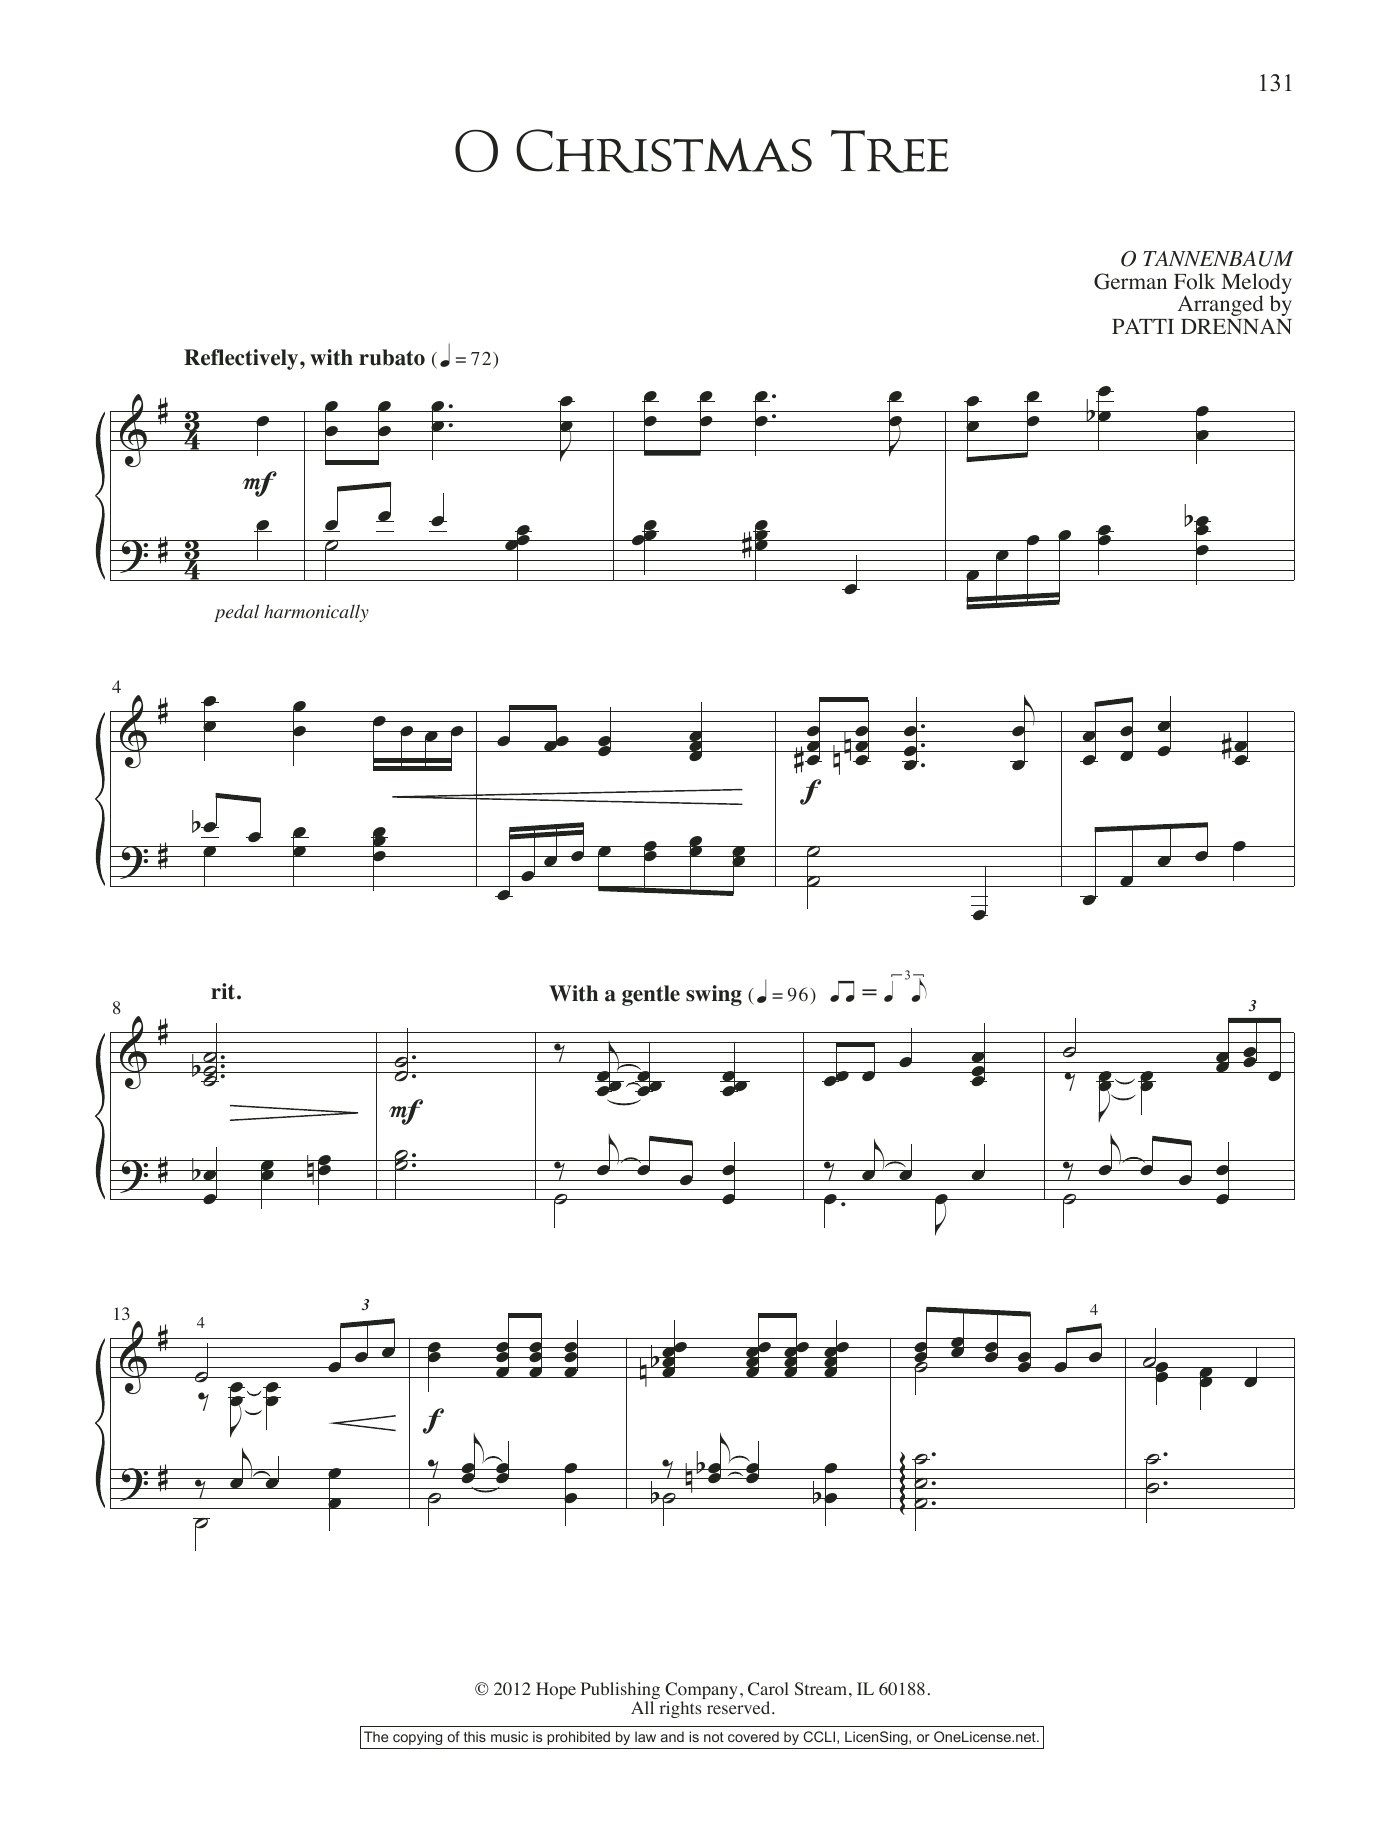 Patti Drennan O Christmas Tree Sheet Music Notes & Chords for Piano Solo - Download or Print PDF